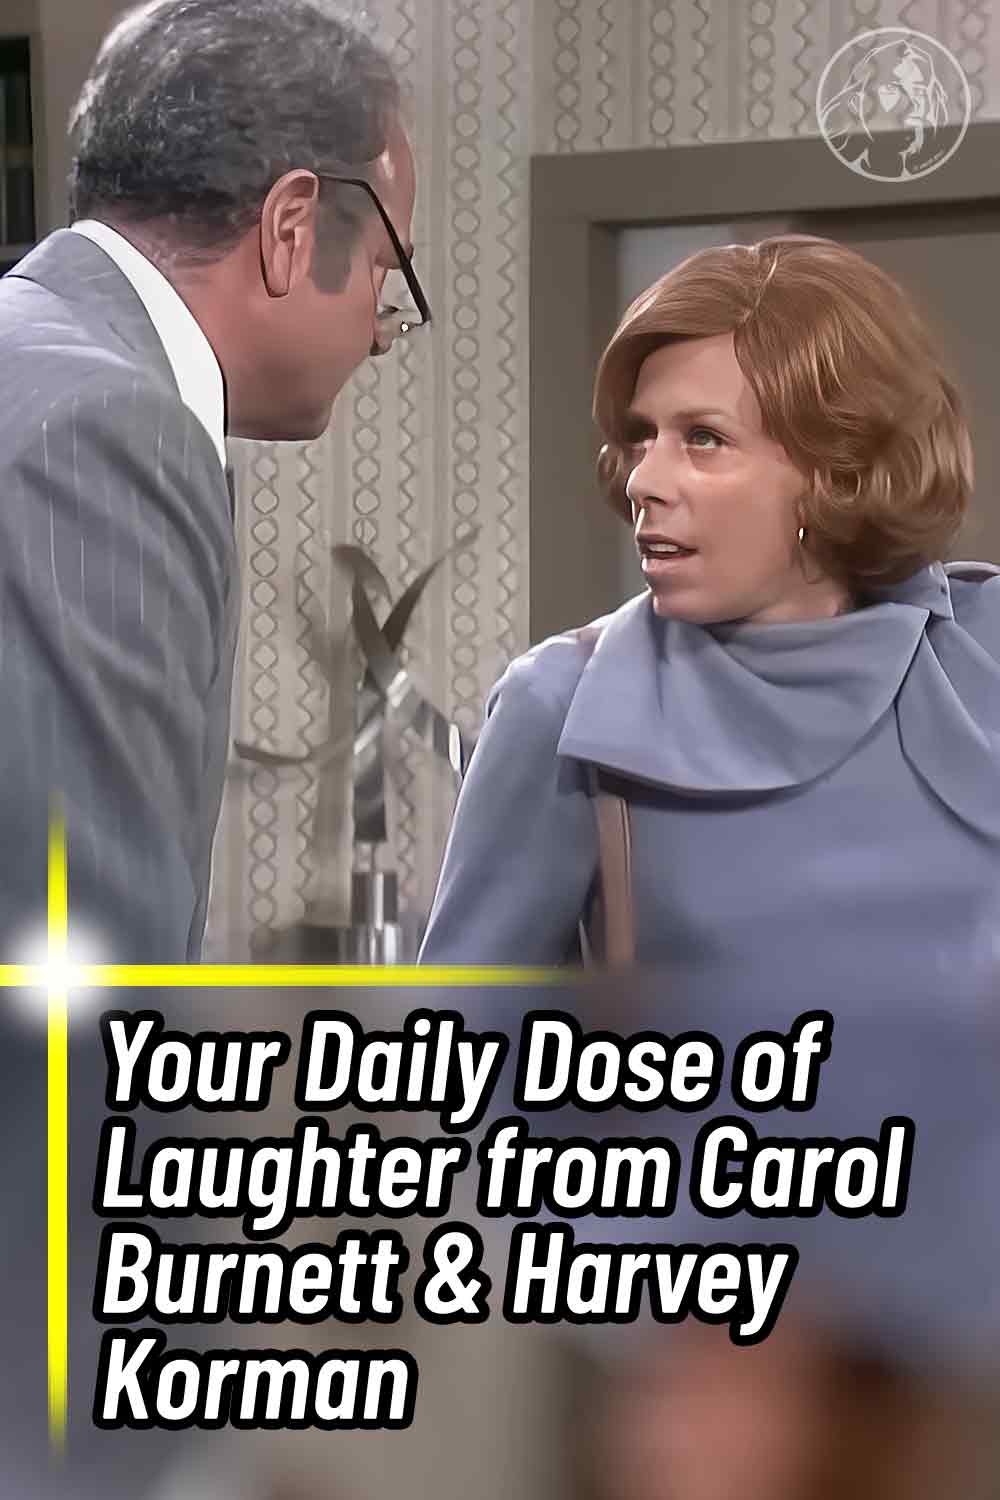 Your Daily Dose of Laughter from Carol Burnett & Harvey Korman